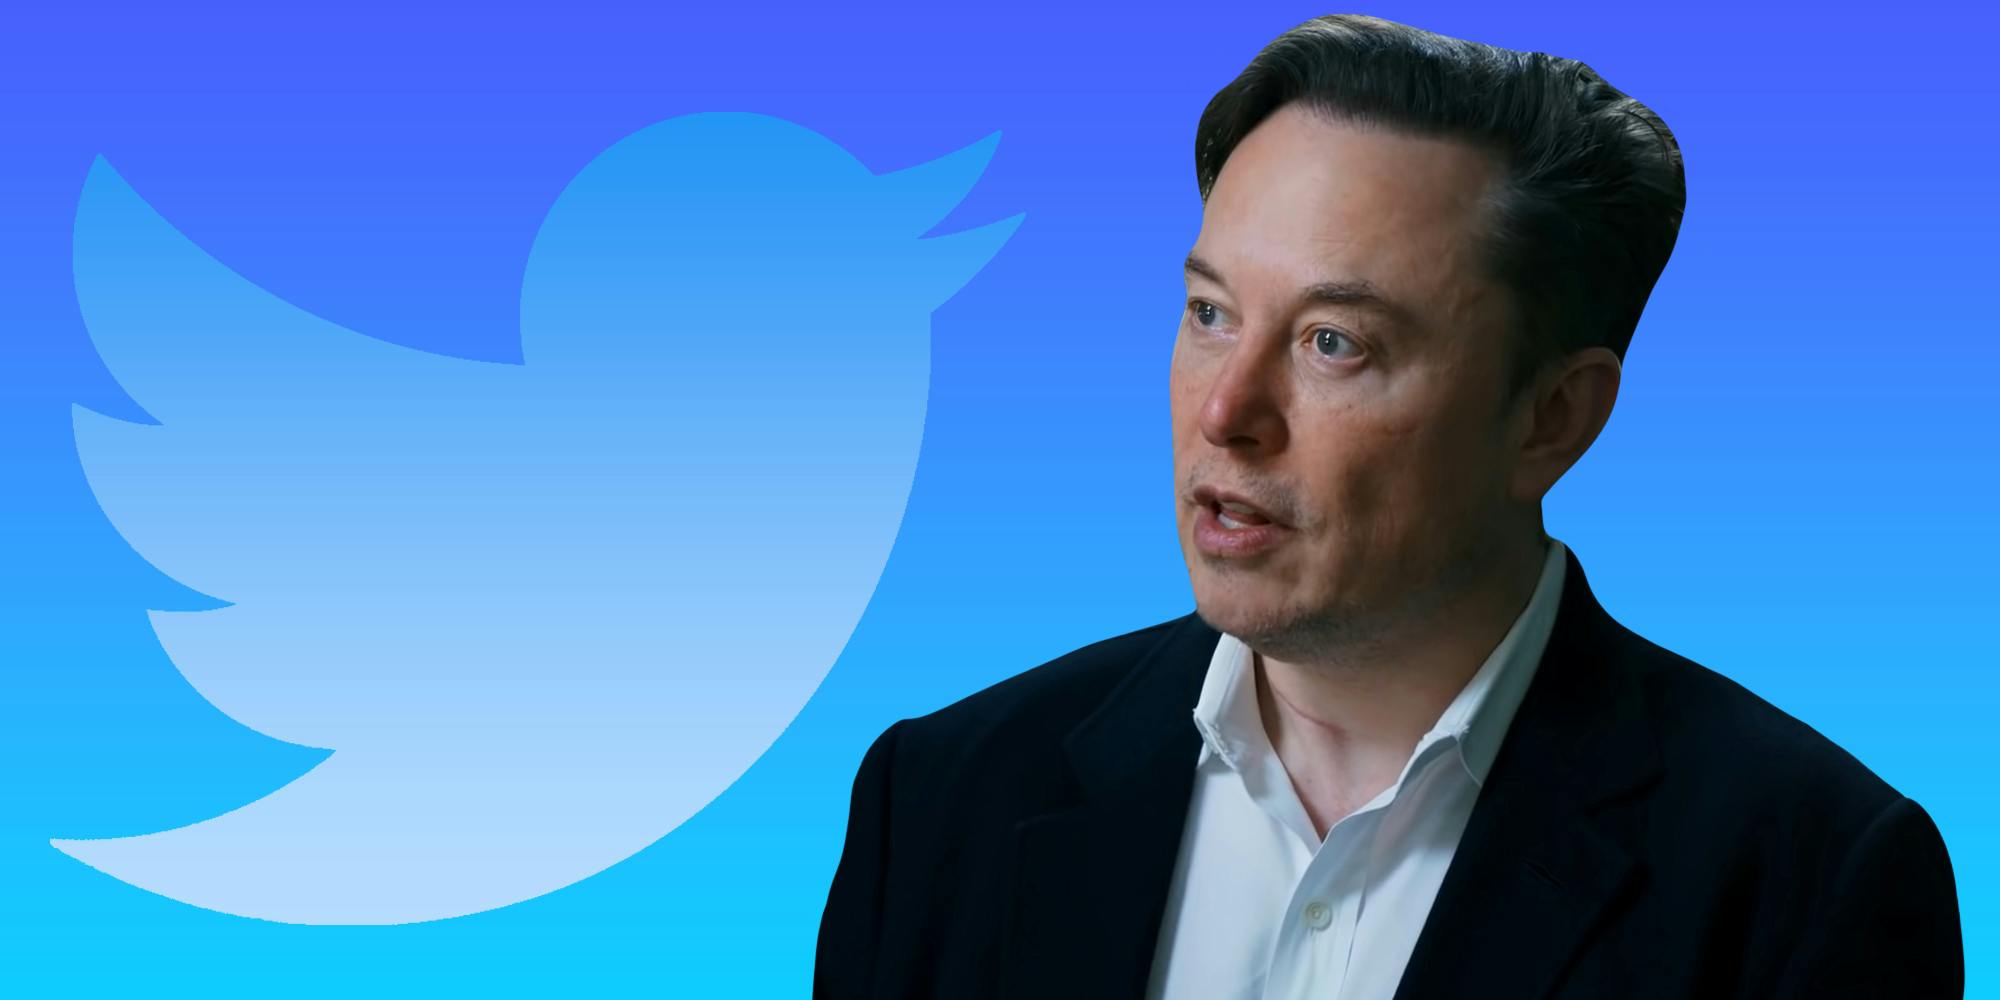 Elon musk speaking on dark to light blue background with Twitter logo to left